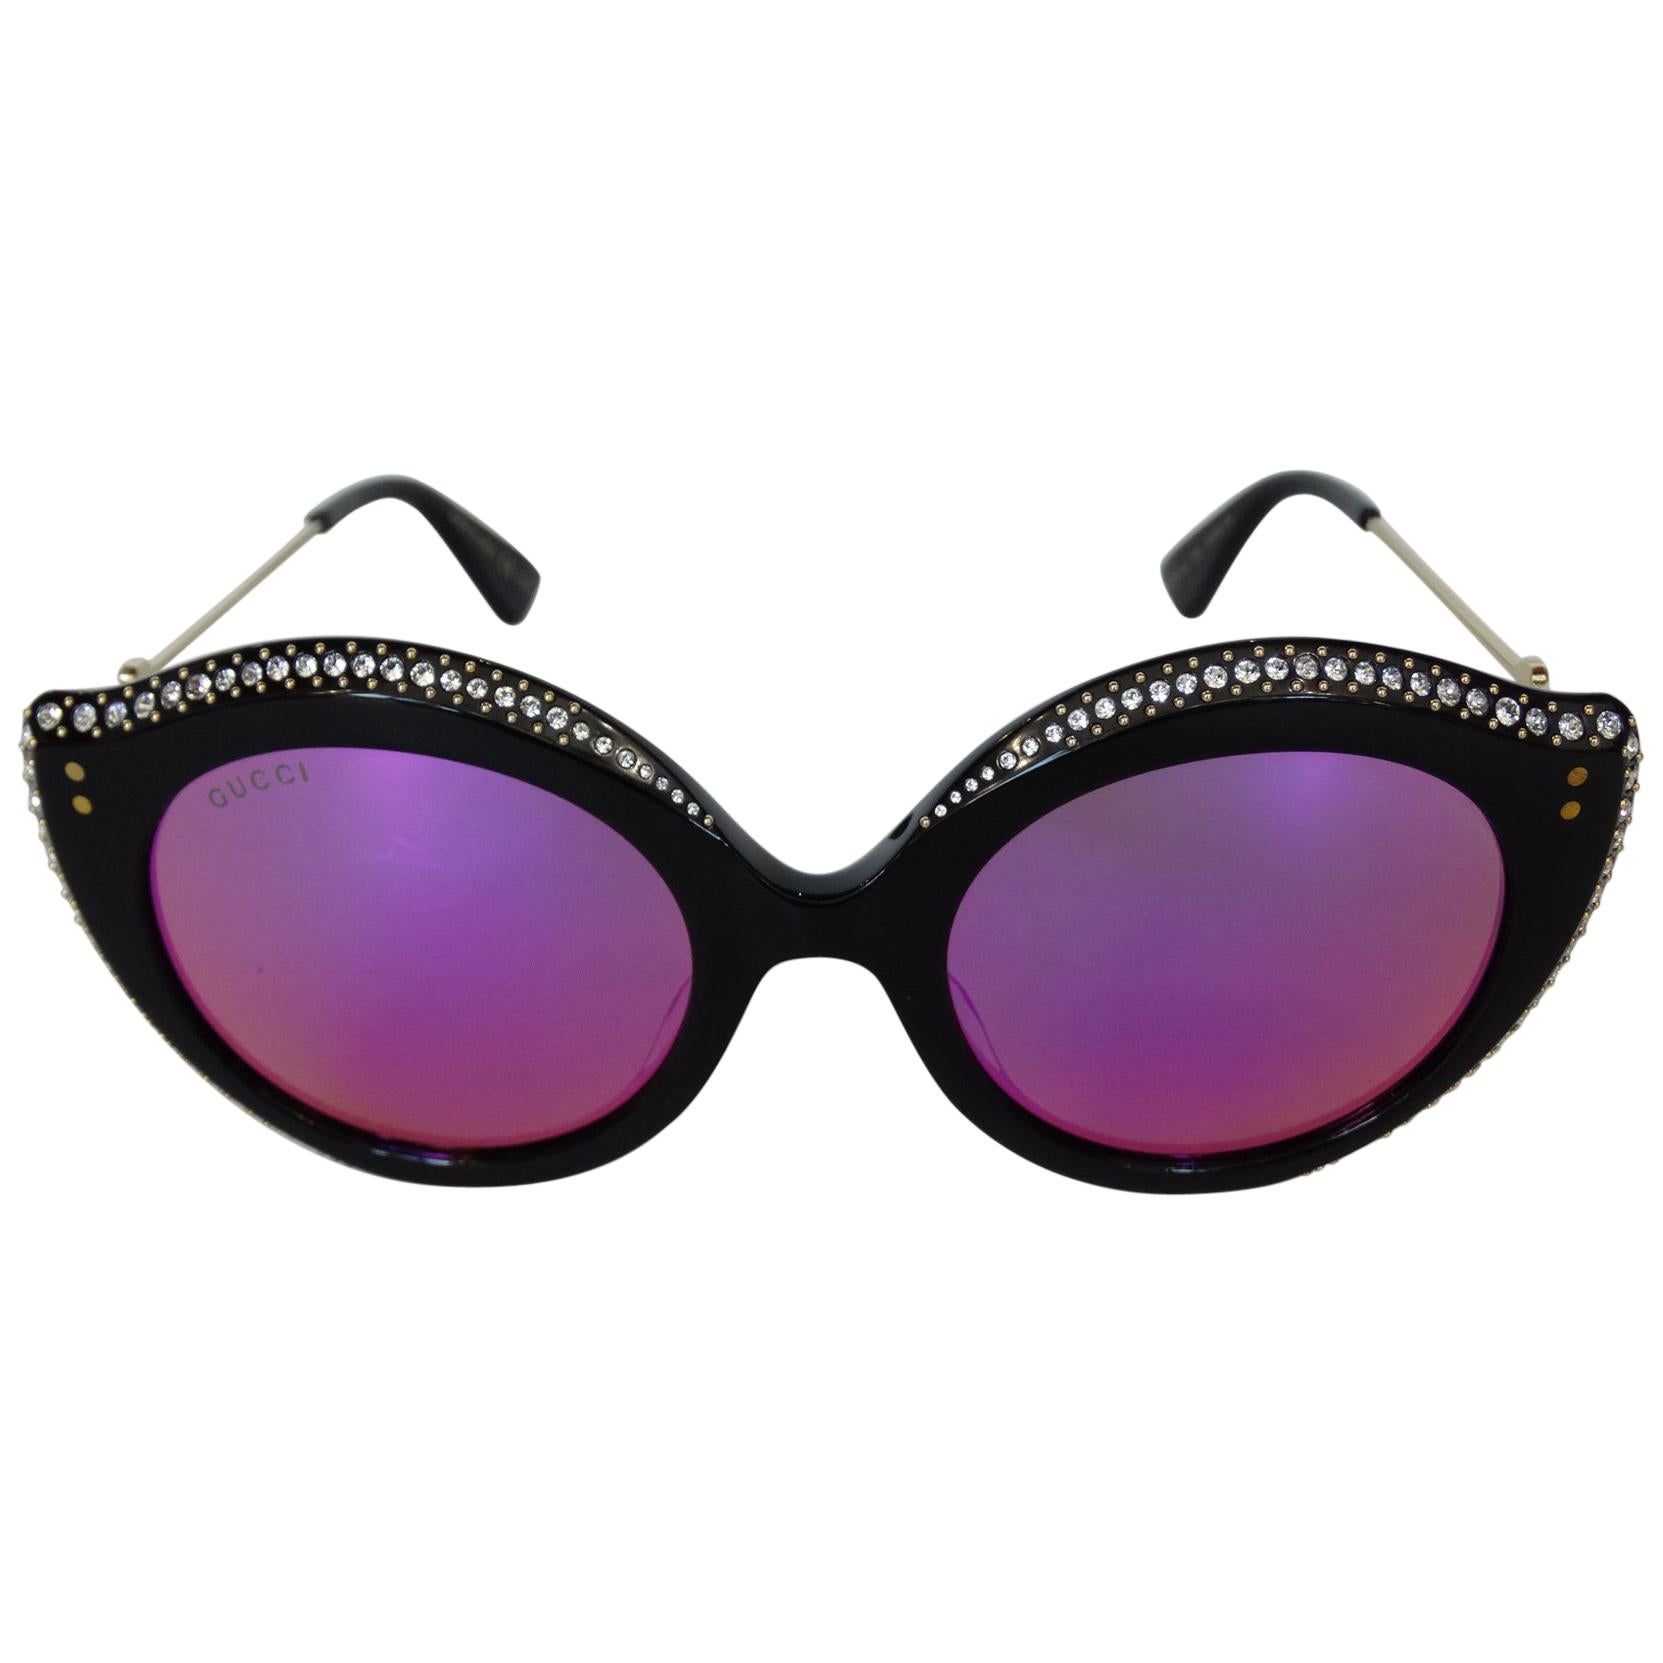 pink rhinestone gucci sunglasses